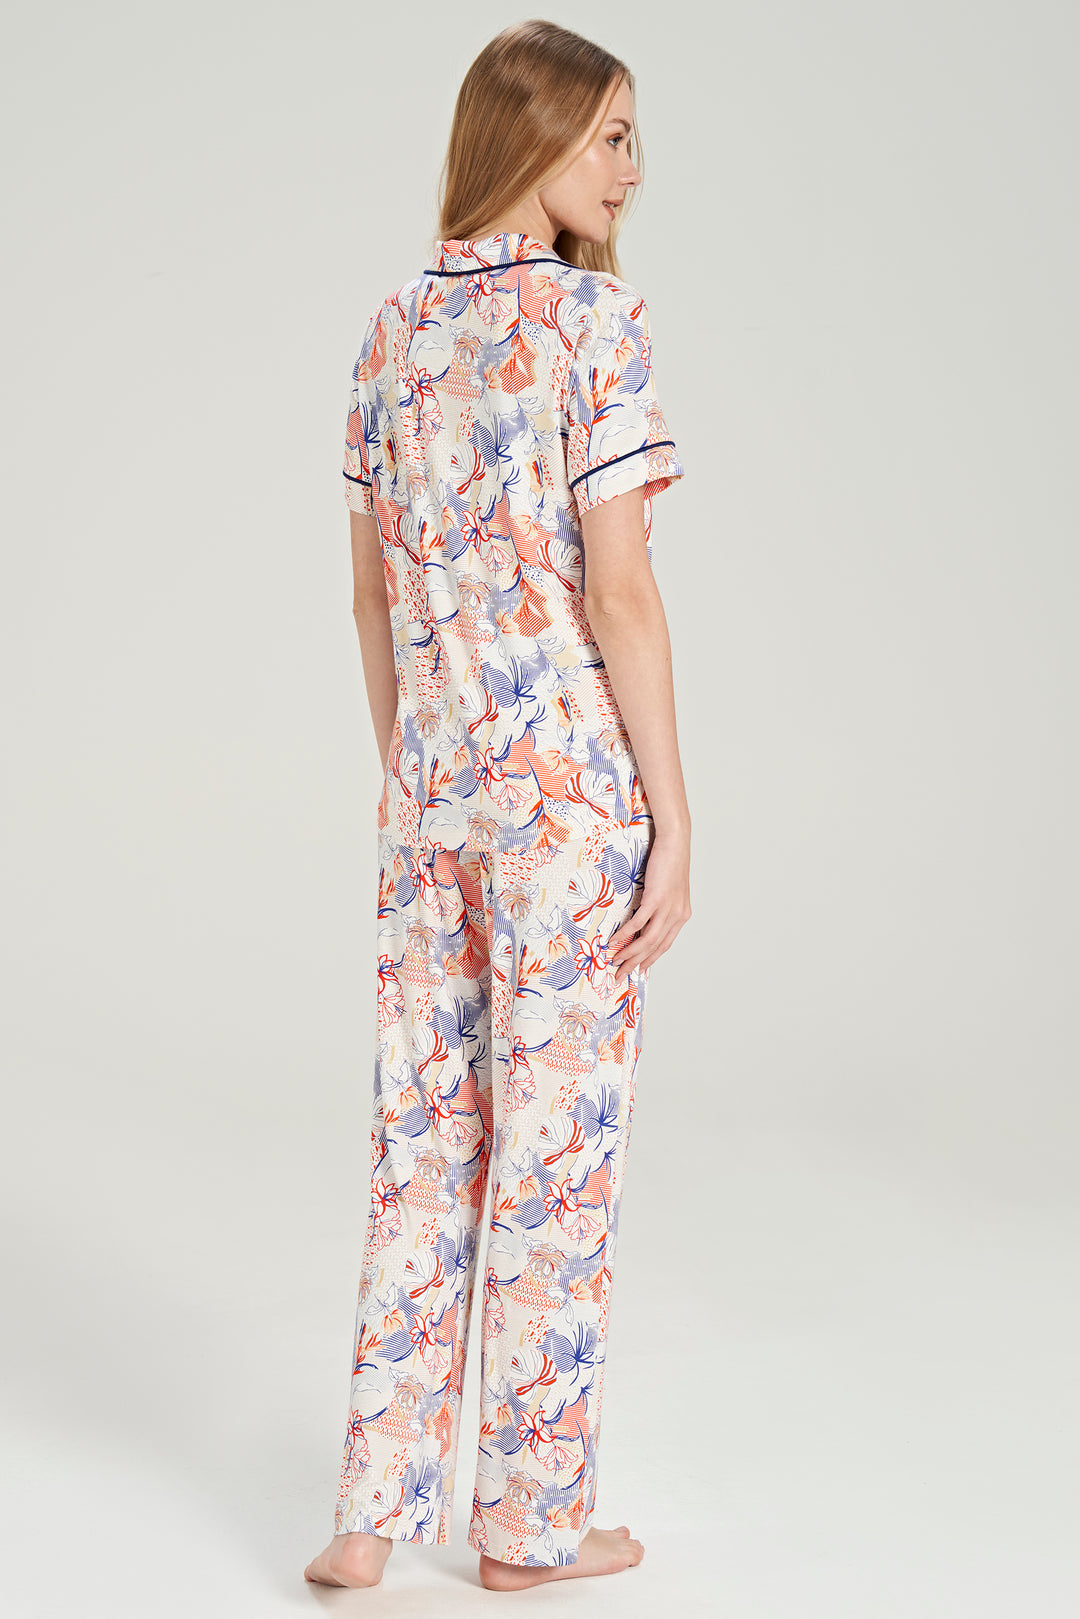 Floral Button-Up Pajama Set